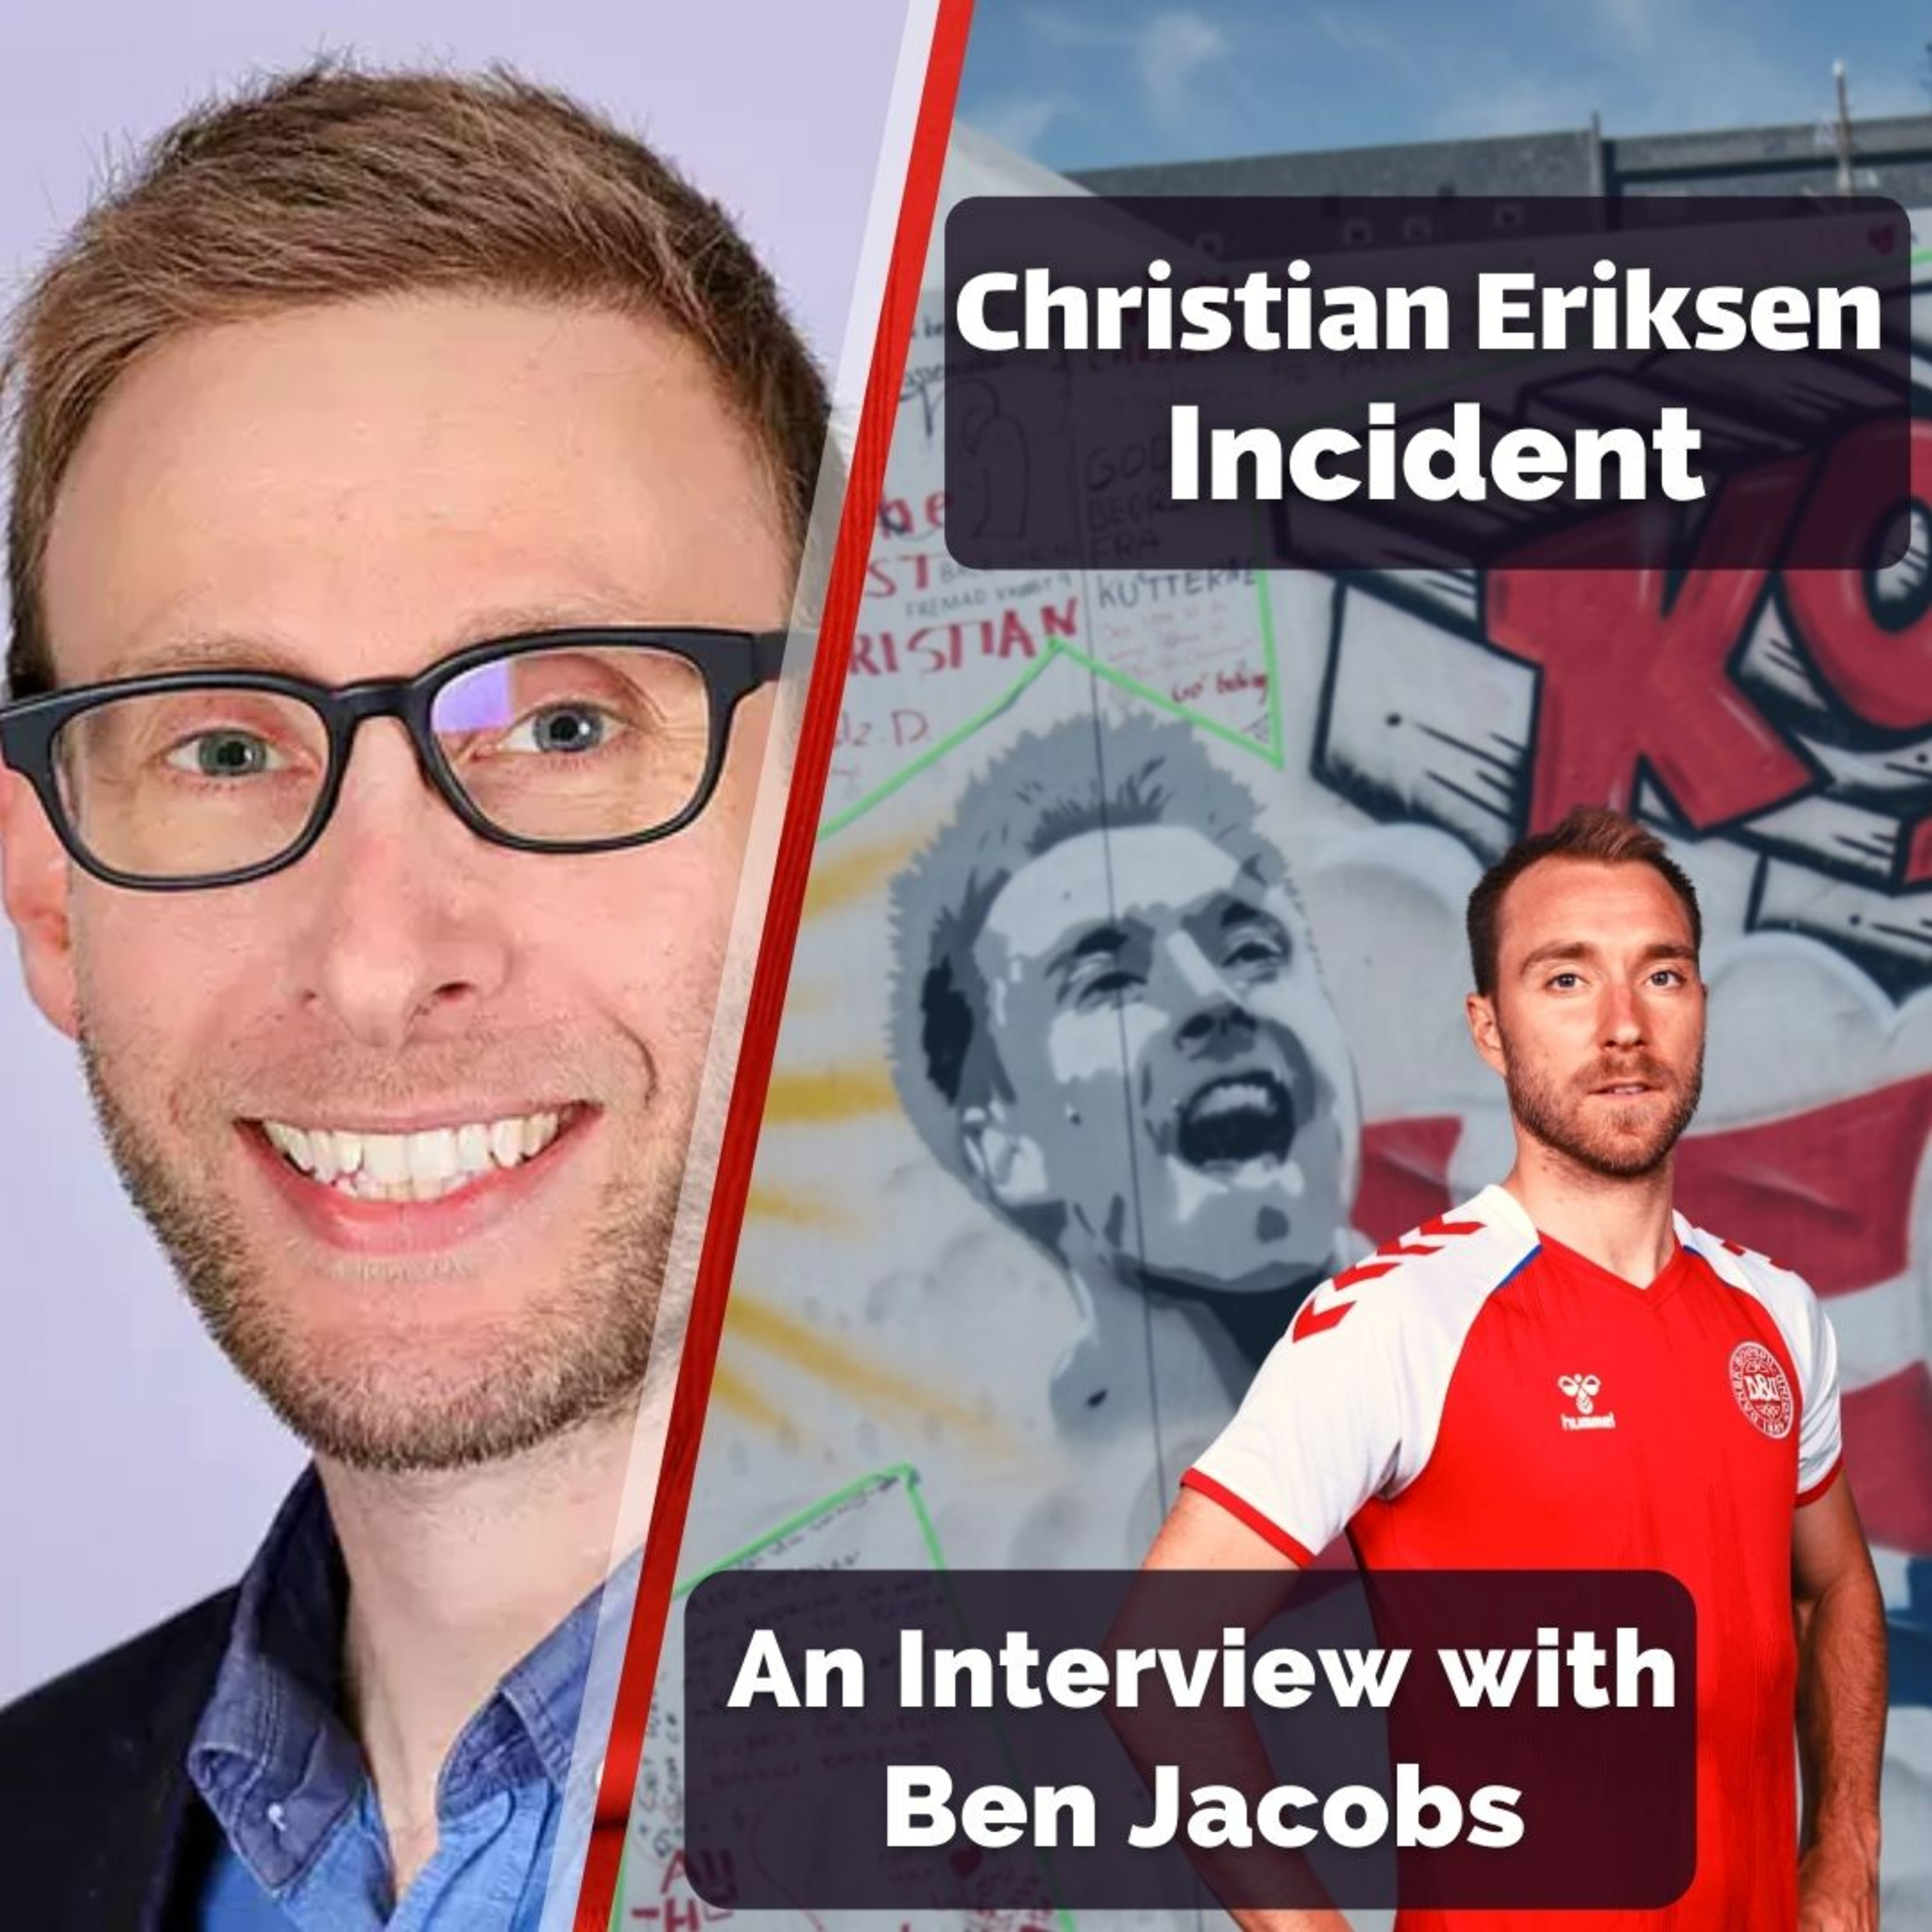 Christian Eriksen's incident: An Interview with Ben Jacobs